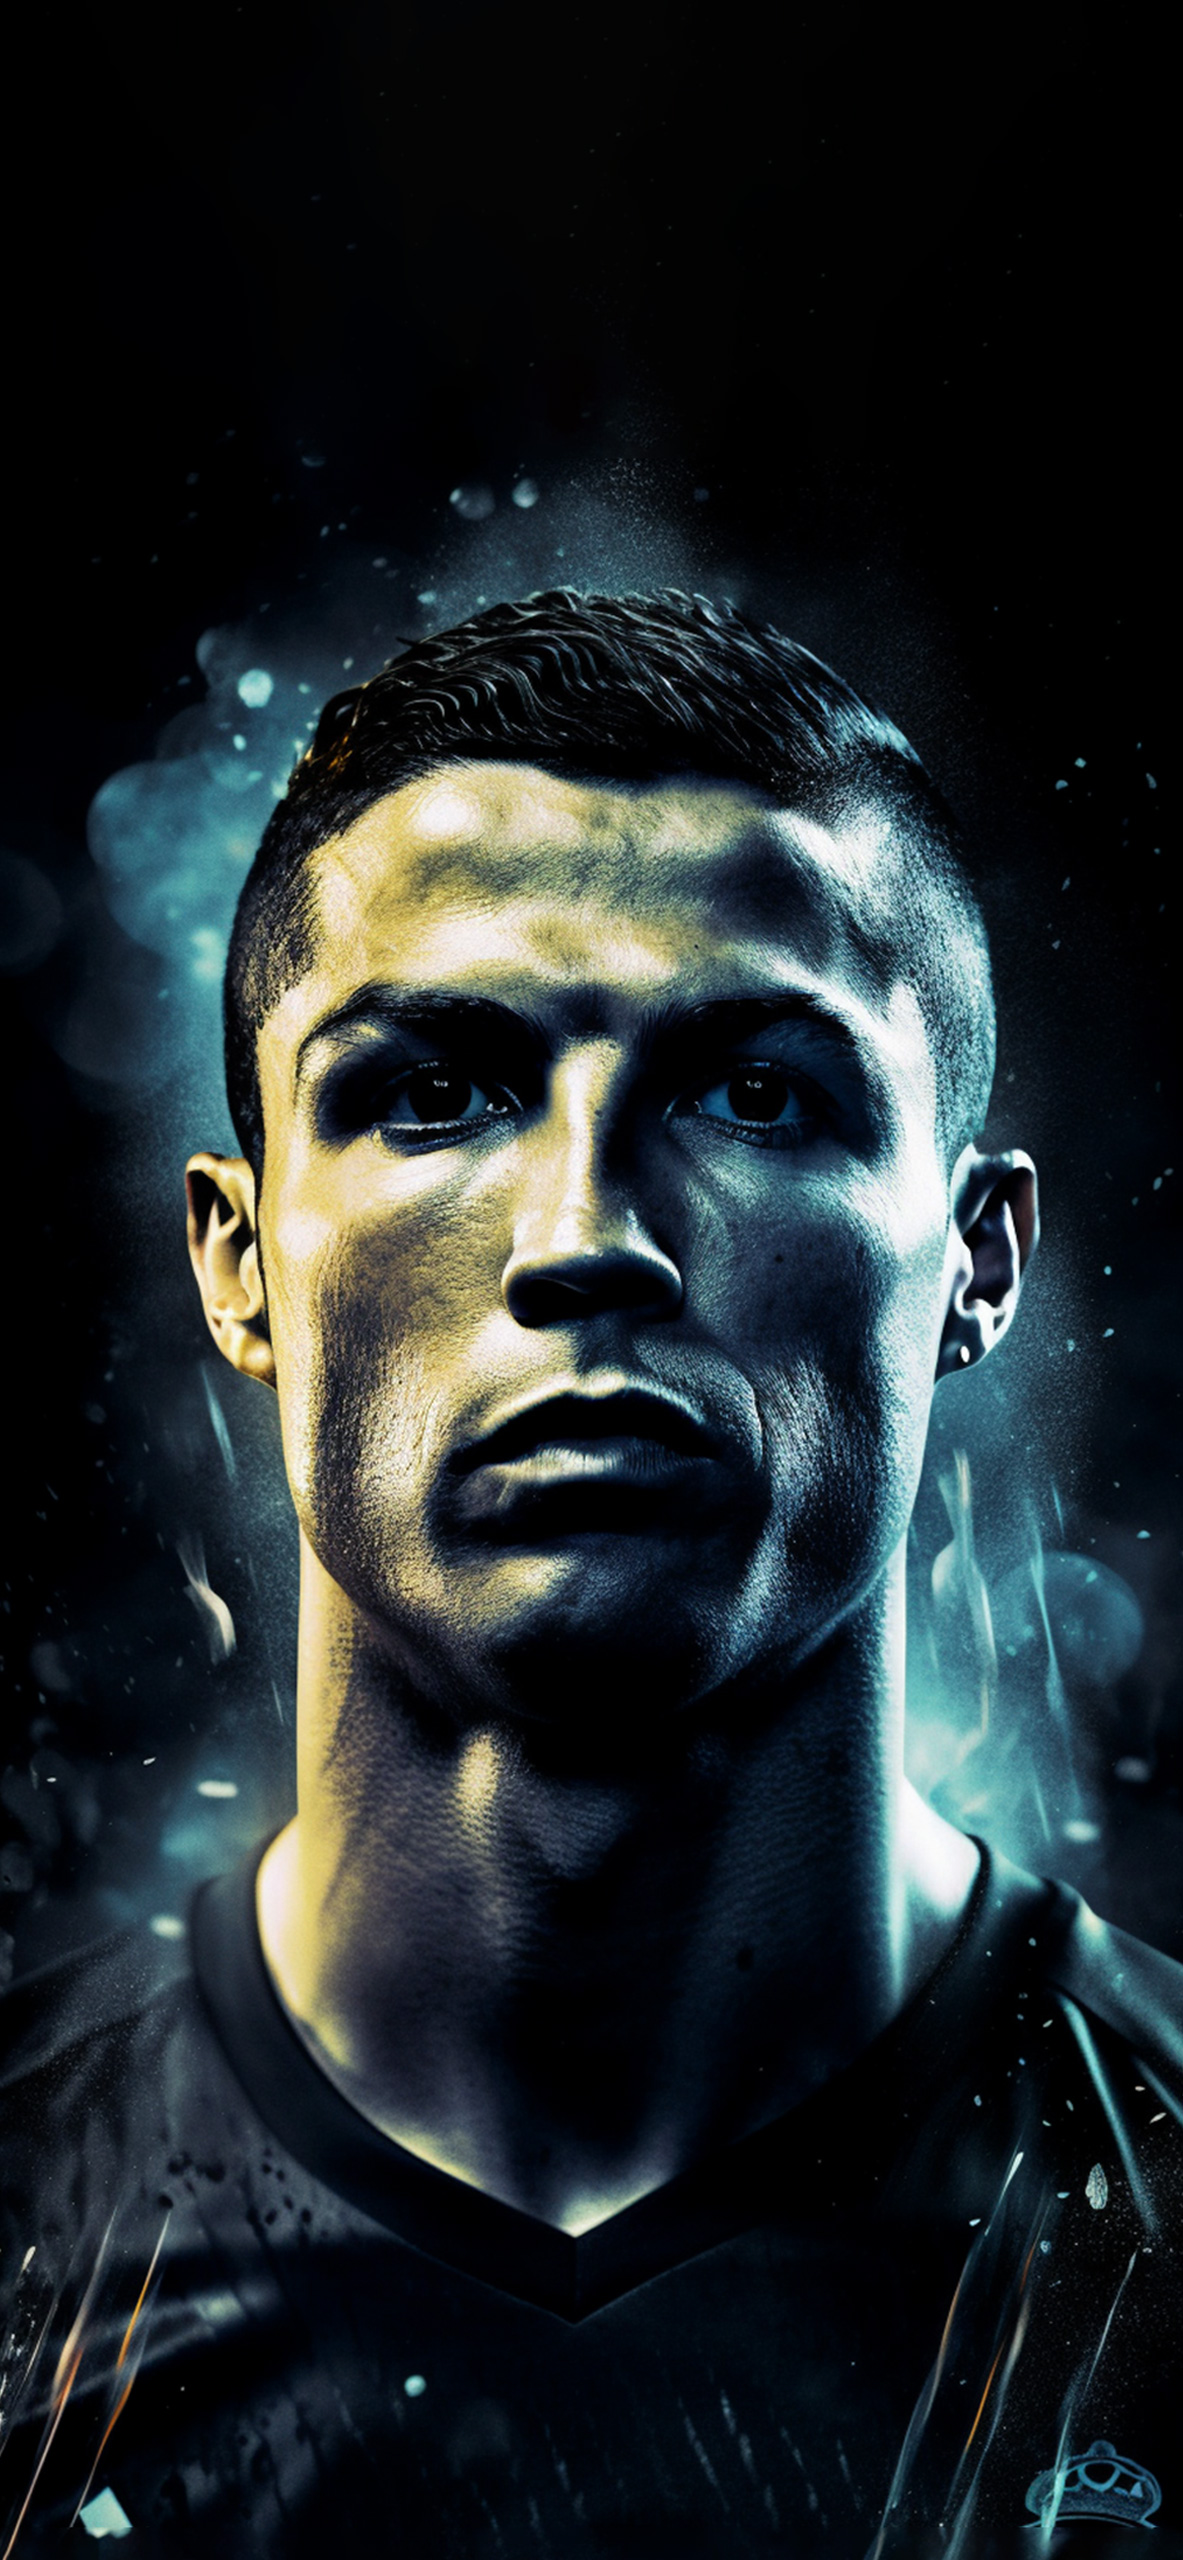 Cristiano Ronaldo Dark Wallpaper Soccer For iPhone